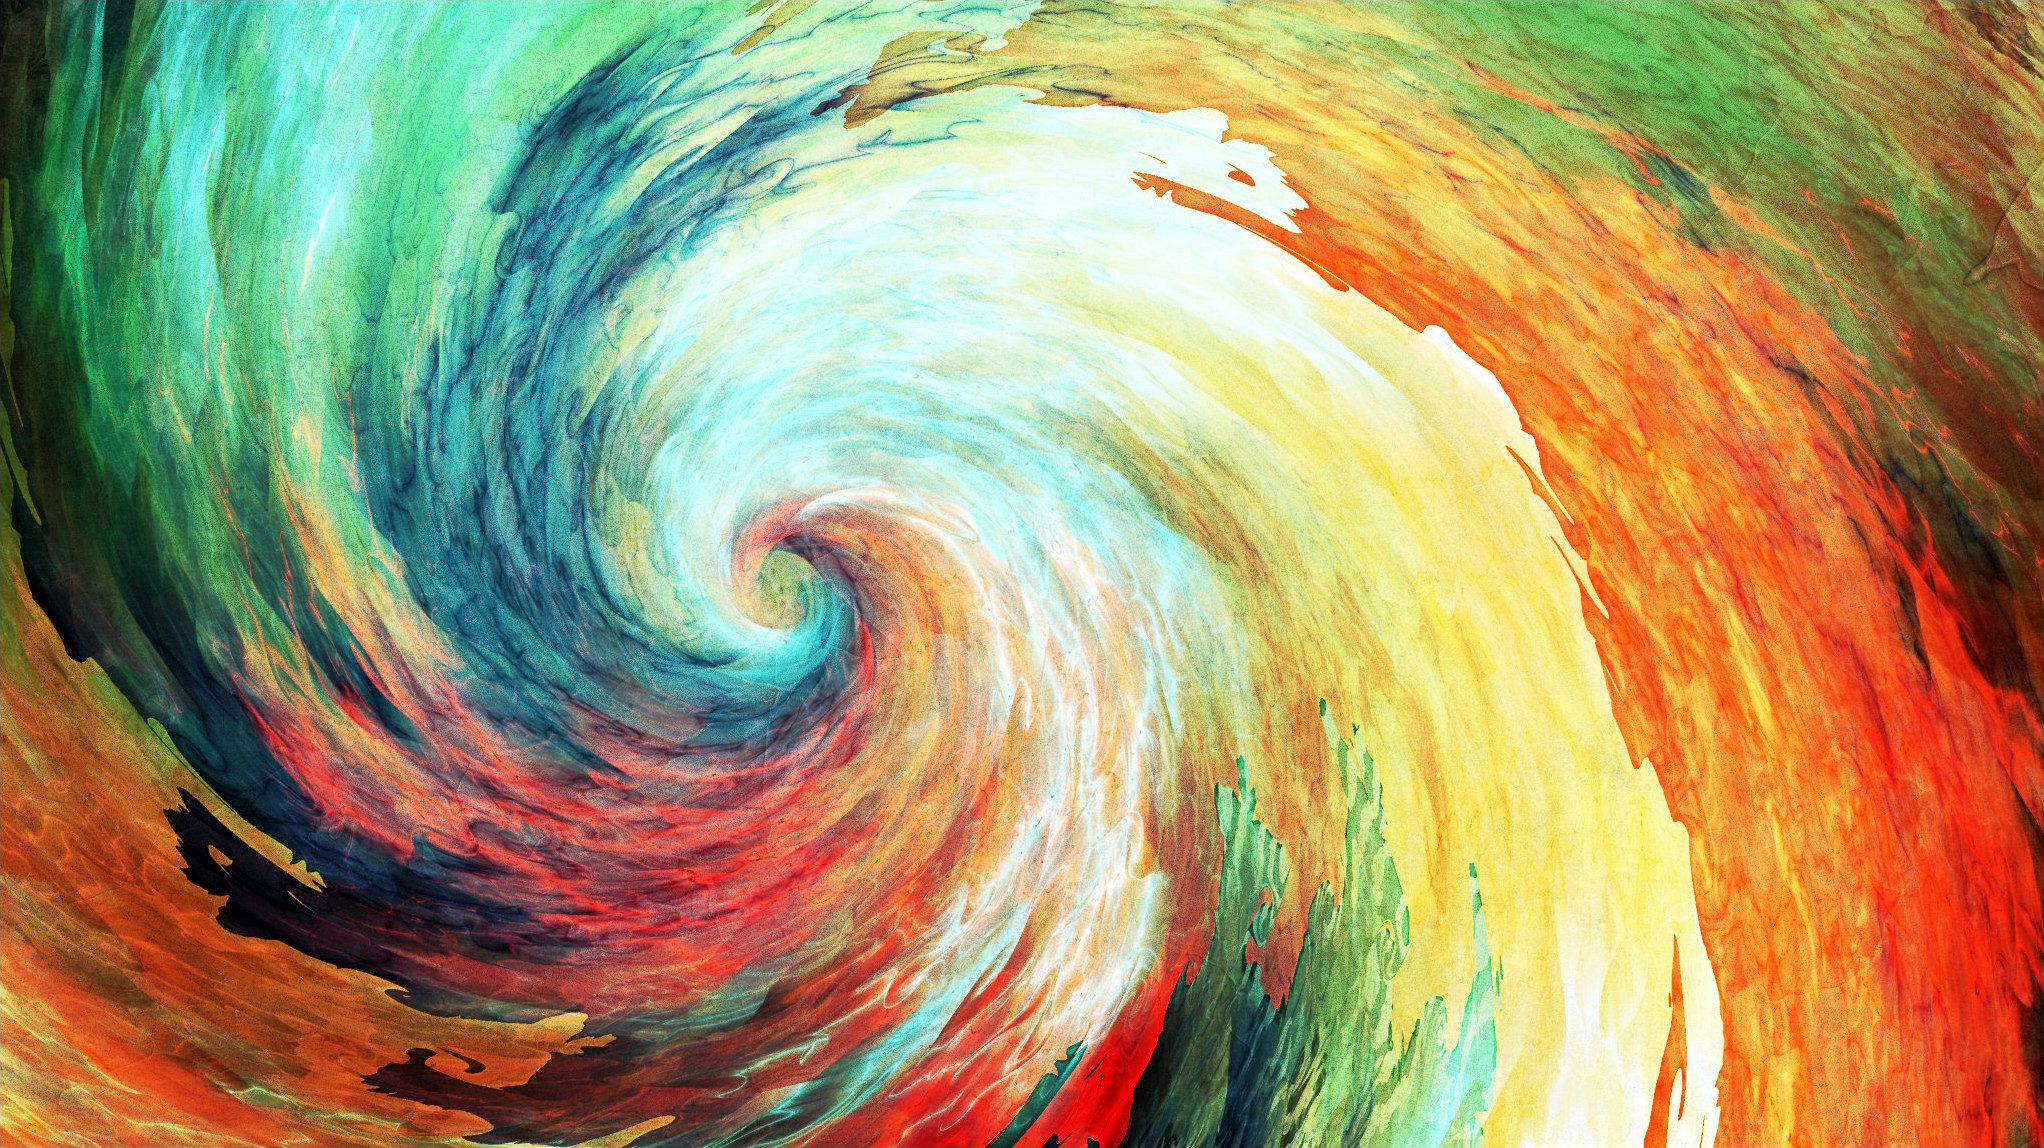 Colorful whirlpool